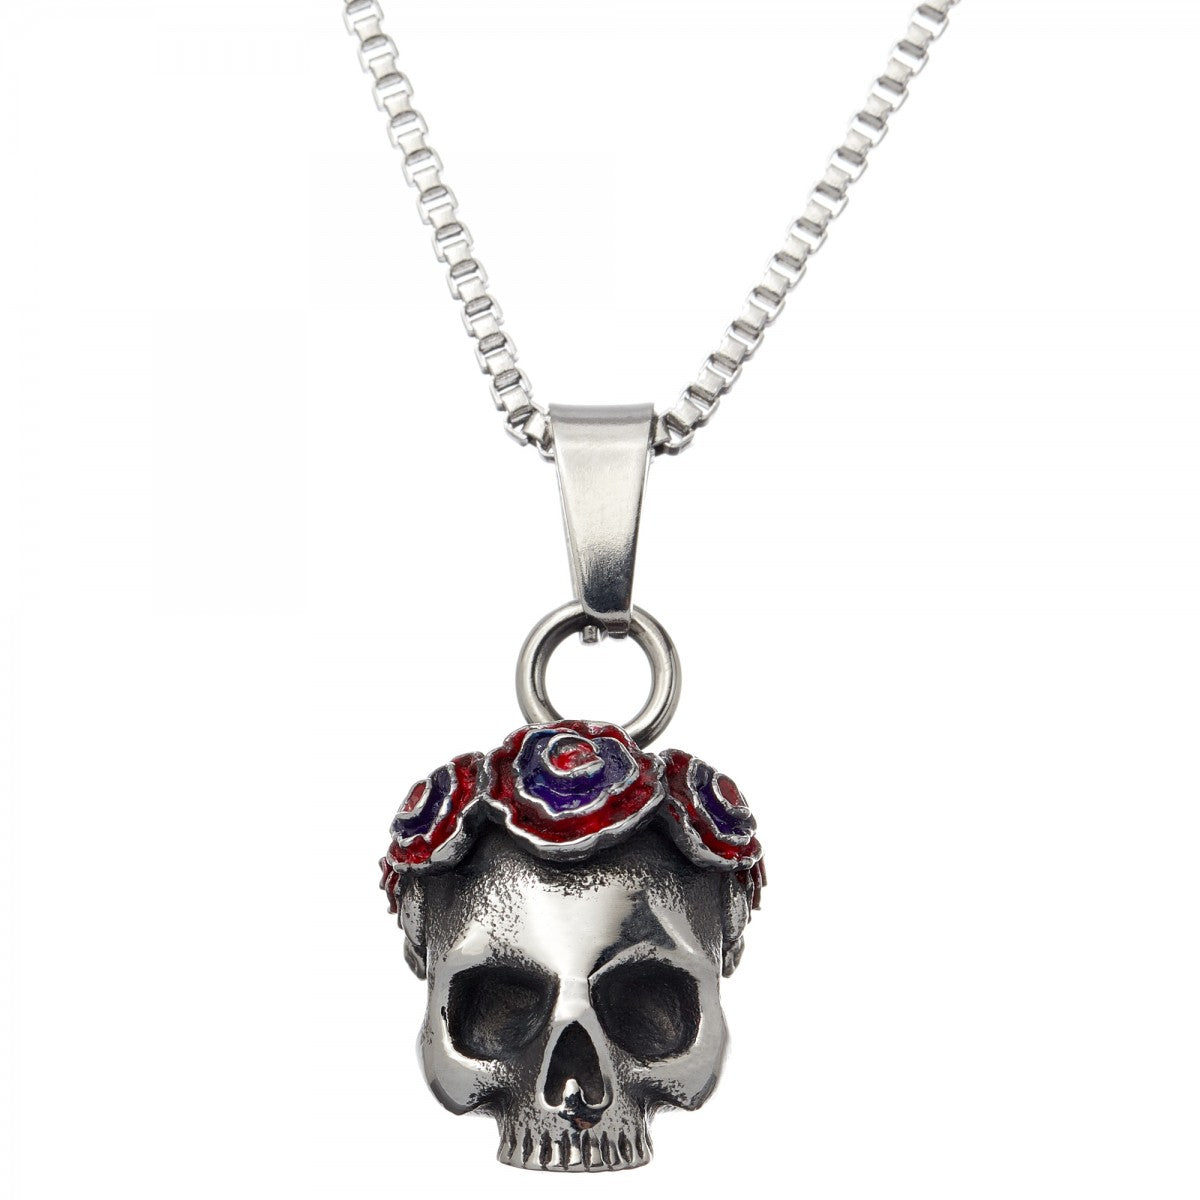 Tateossian Grateful Dead Gothic Rose Skull Pendant Necklace, Silver Steel, 48.5 cm Chain Length